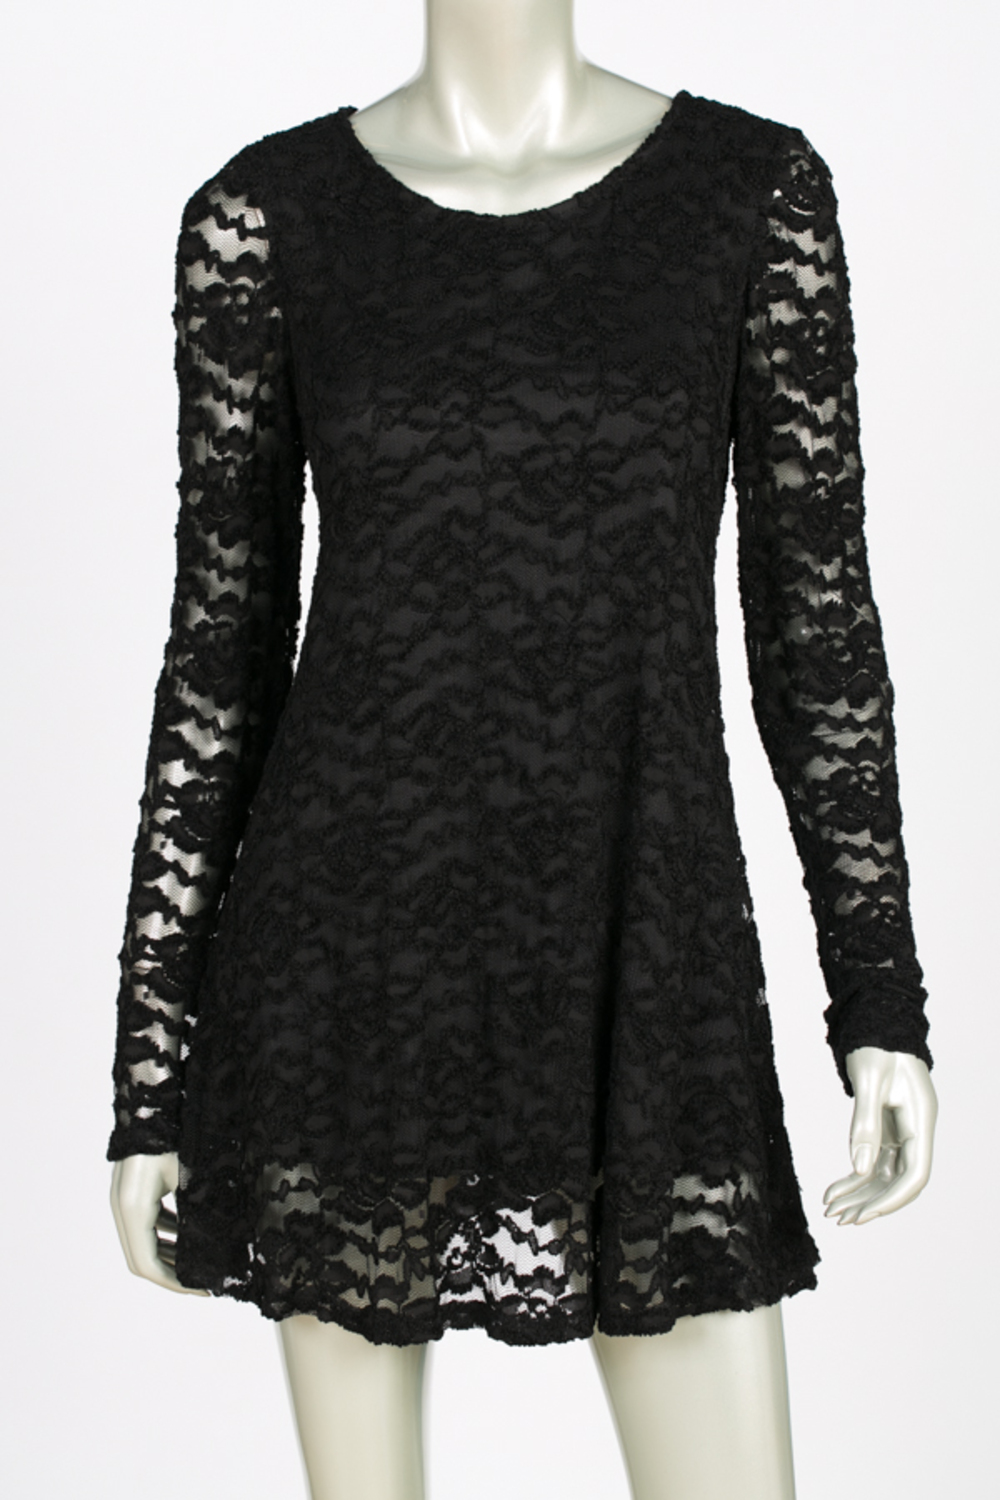 Joseph Ribkoff tunic style 144459. Black/black